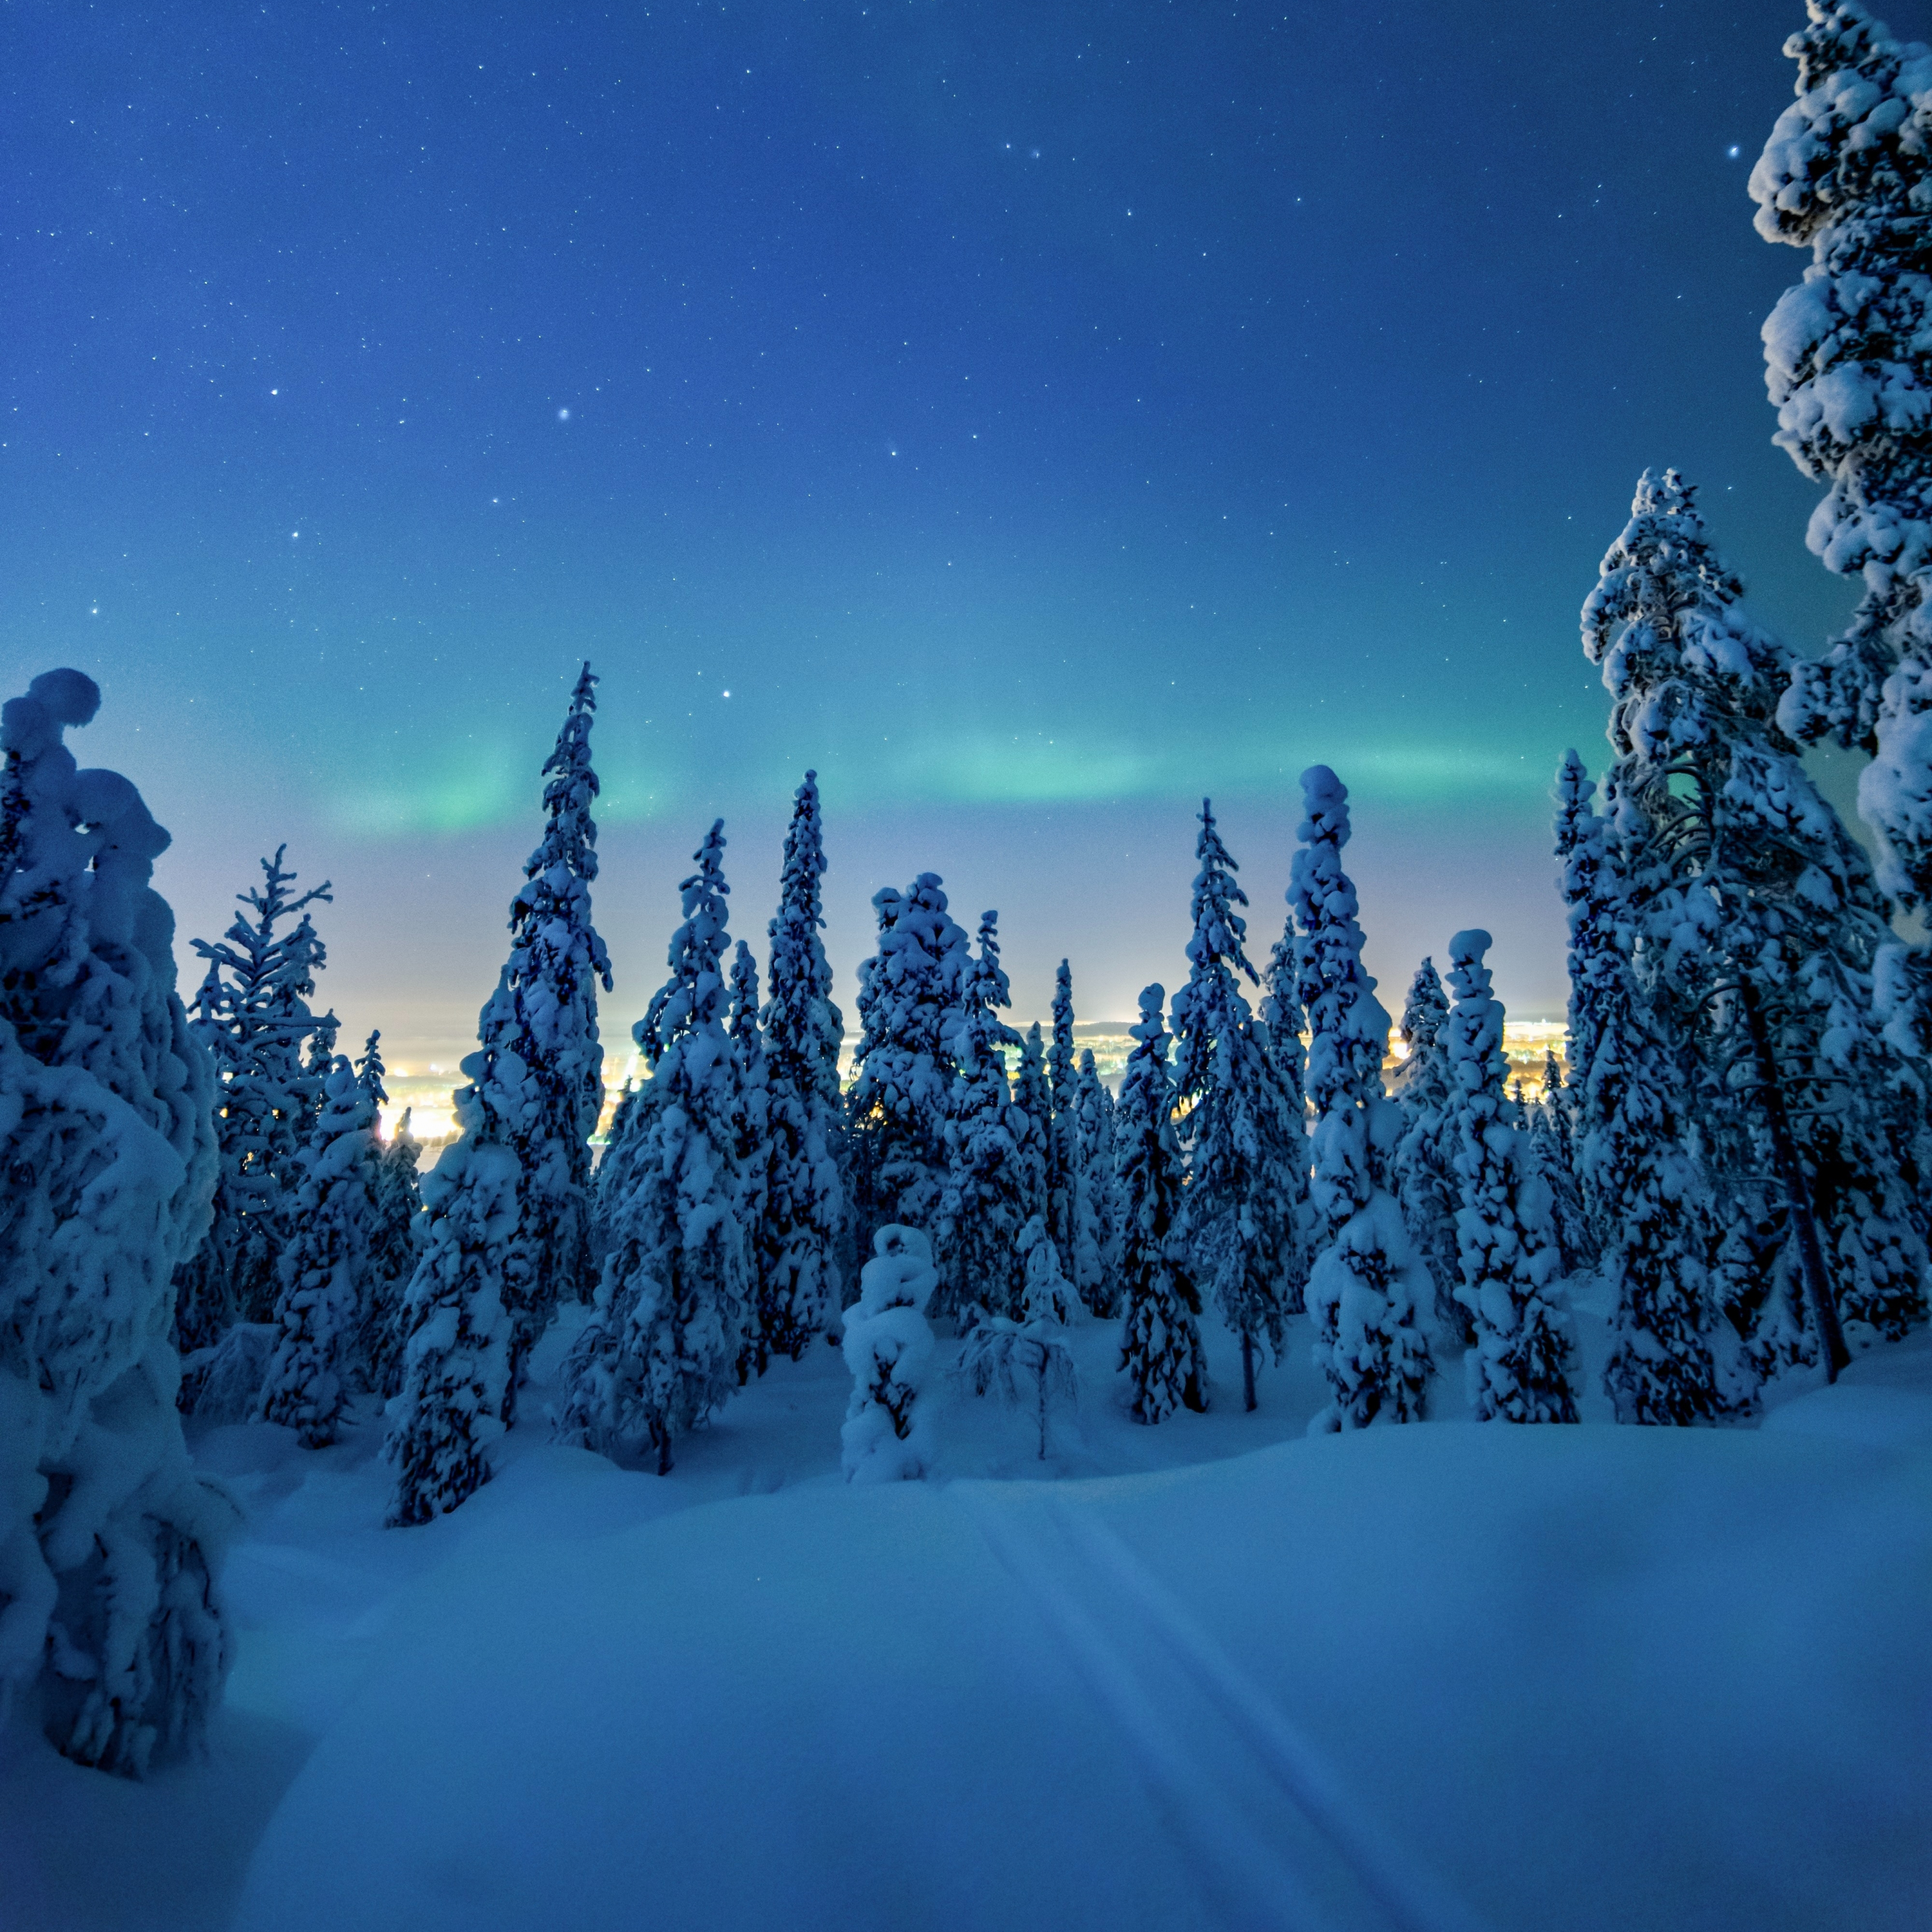 Download wallpaper 2932x2932 winter, dawn, colorful sky, trees, ipad pro retina, 2932x2932 HD background, 23743